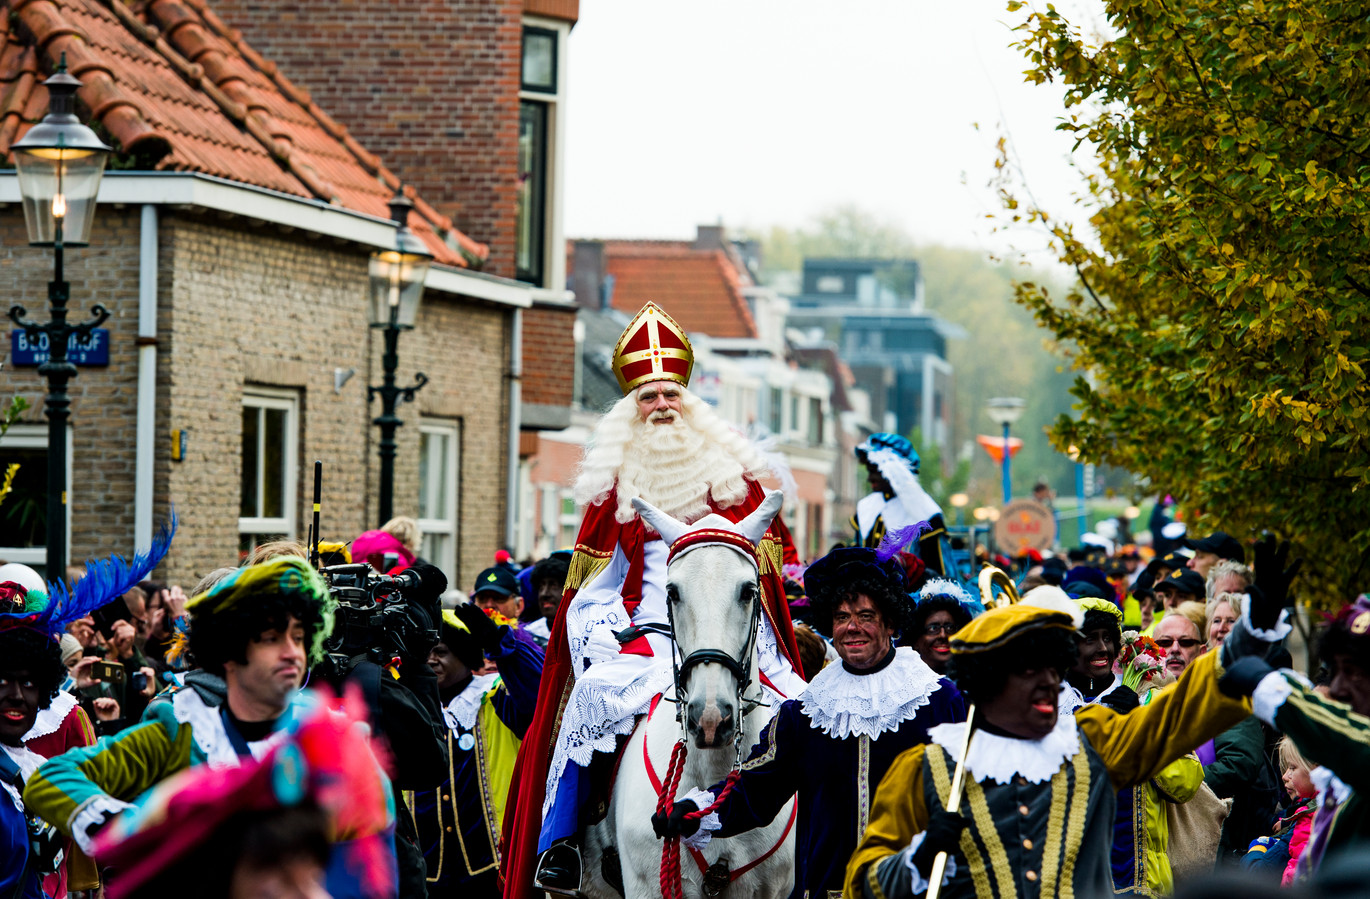 bar Absoluut Vermindering Minister vertrouwt op oplossing nationale Sinterklaasintocht | Foto | AD.nl